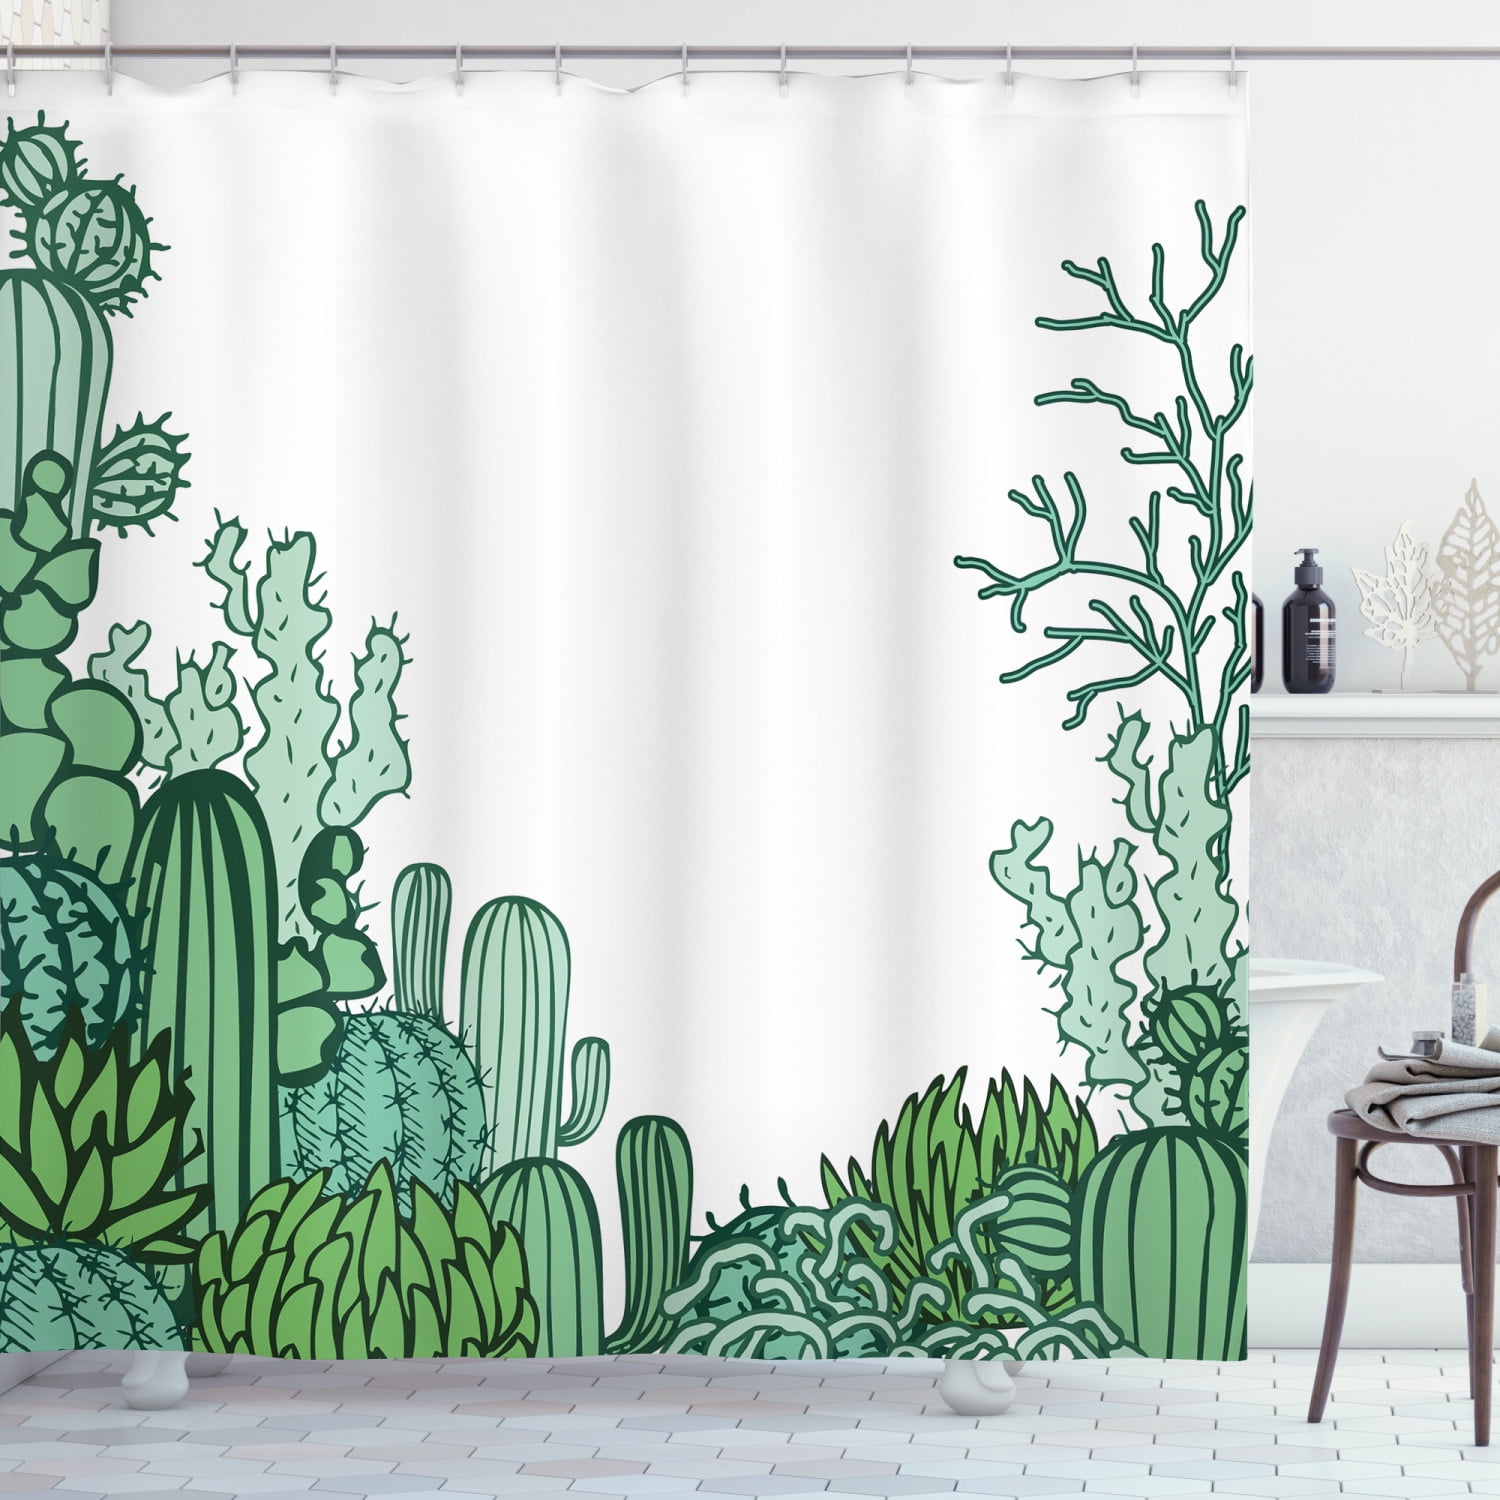 Cactus Grows Waterproof Bathroom Polyester Shower Curtain Liner Water Resistant 